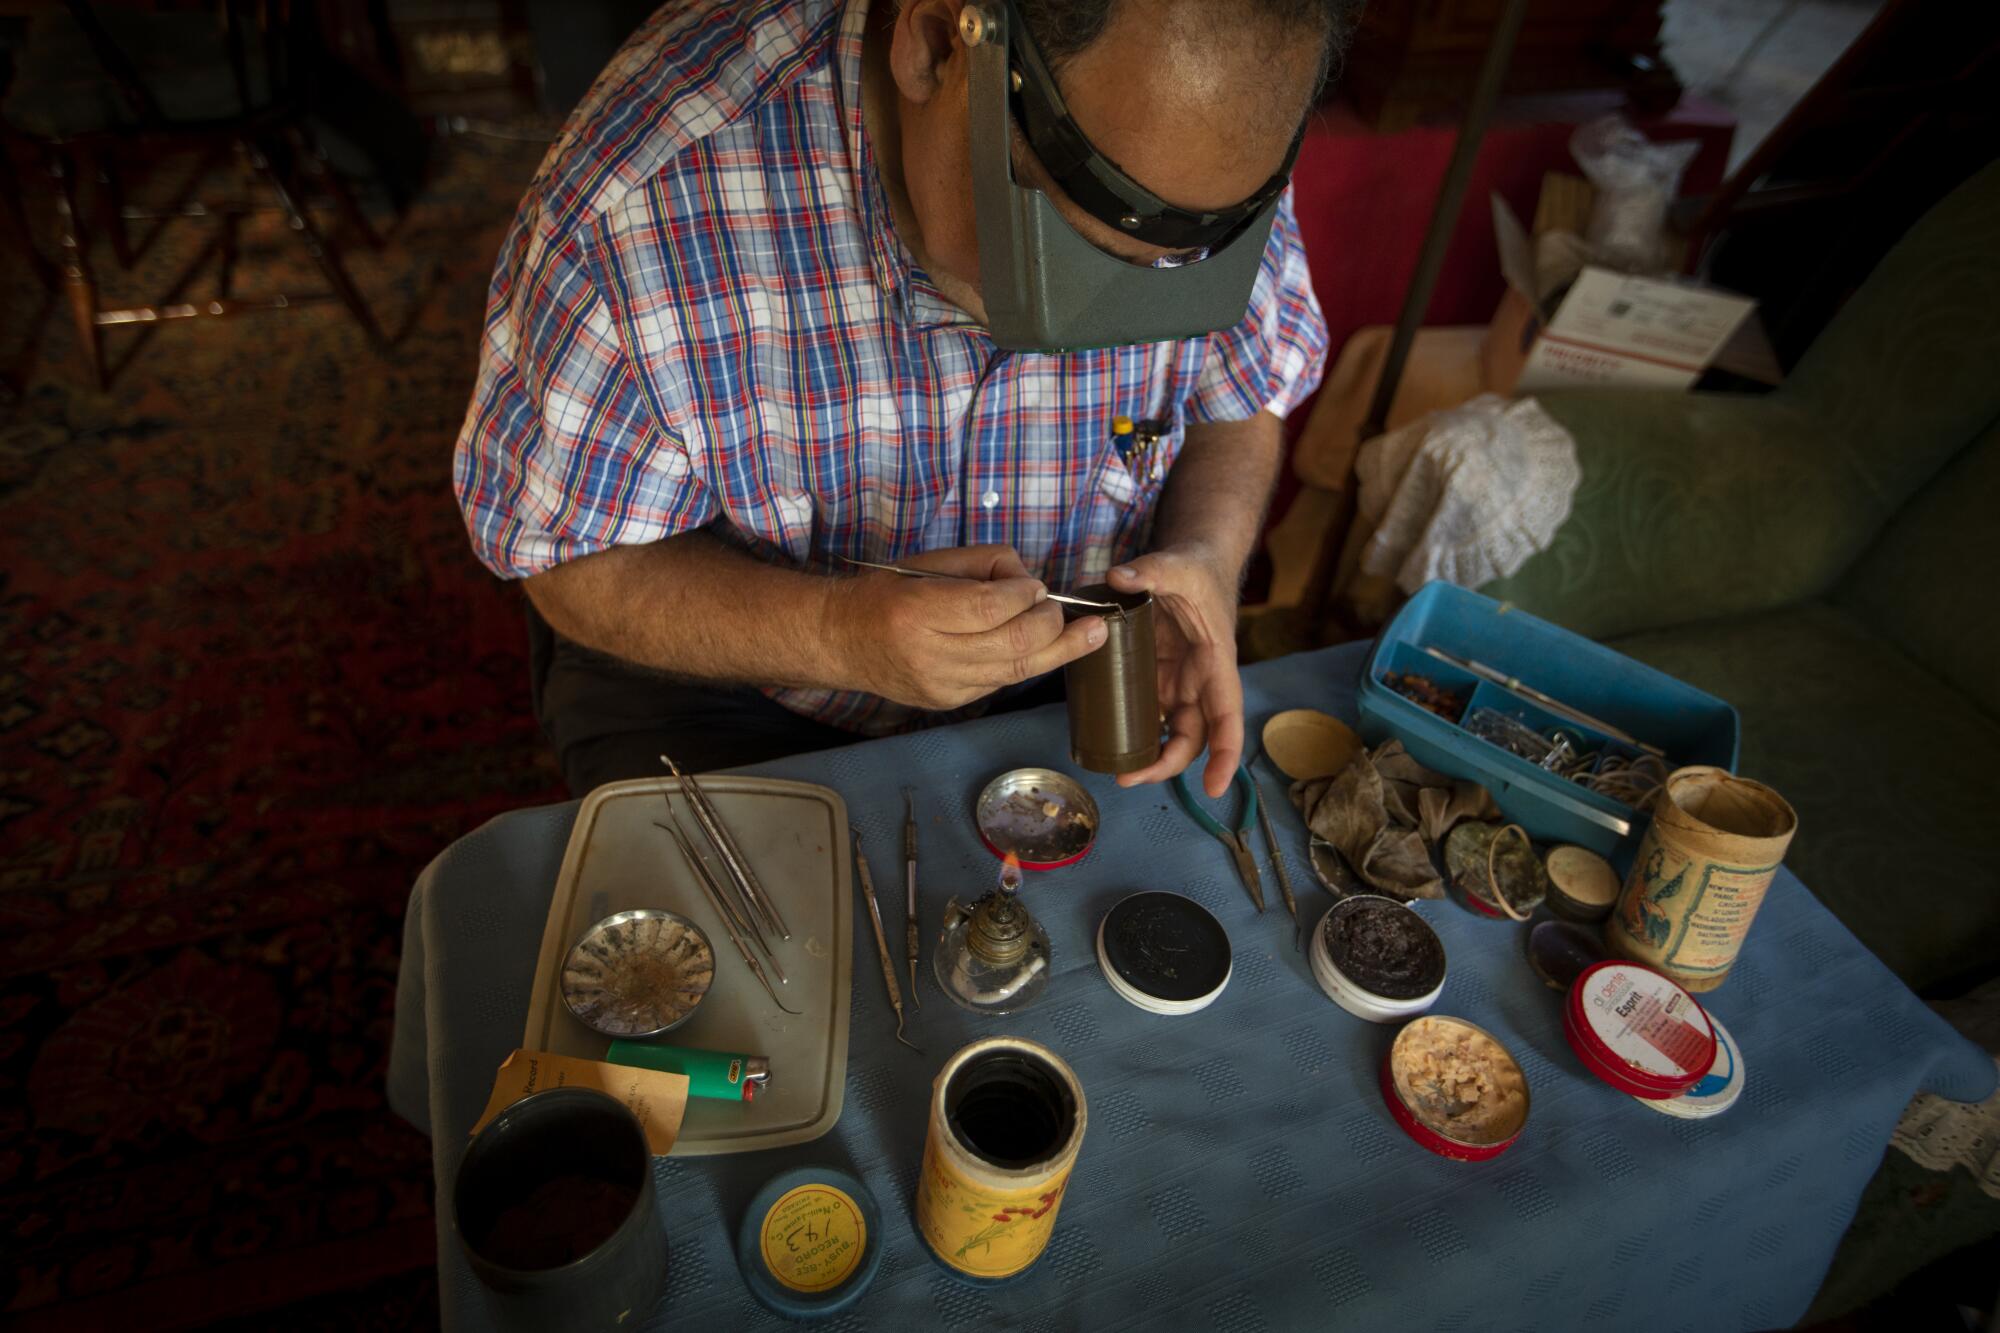 Collector Michael Khanchalian repairs a wax cylinder using dental instruments.